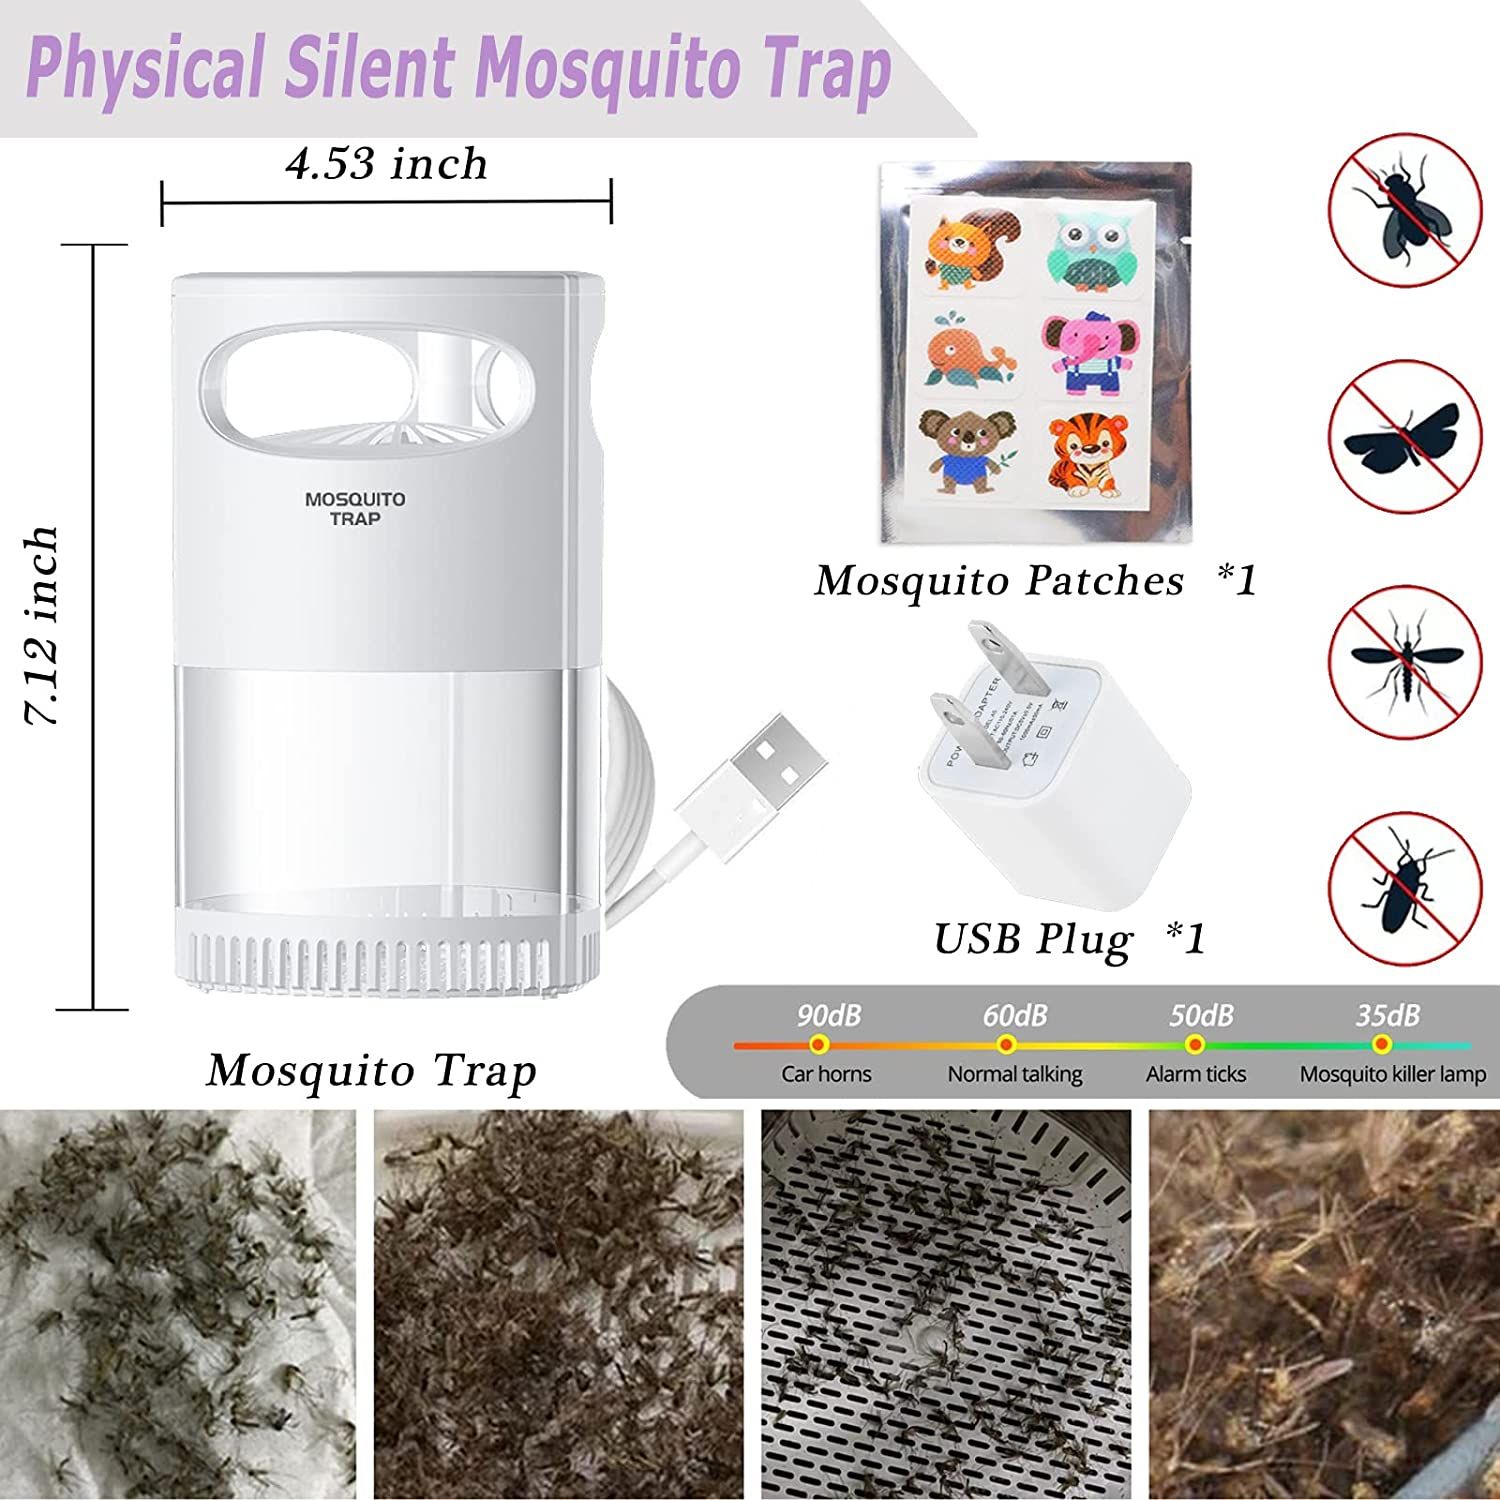 Mosquito Zapper Components